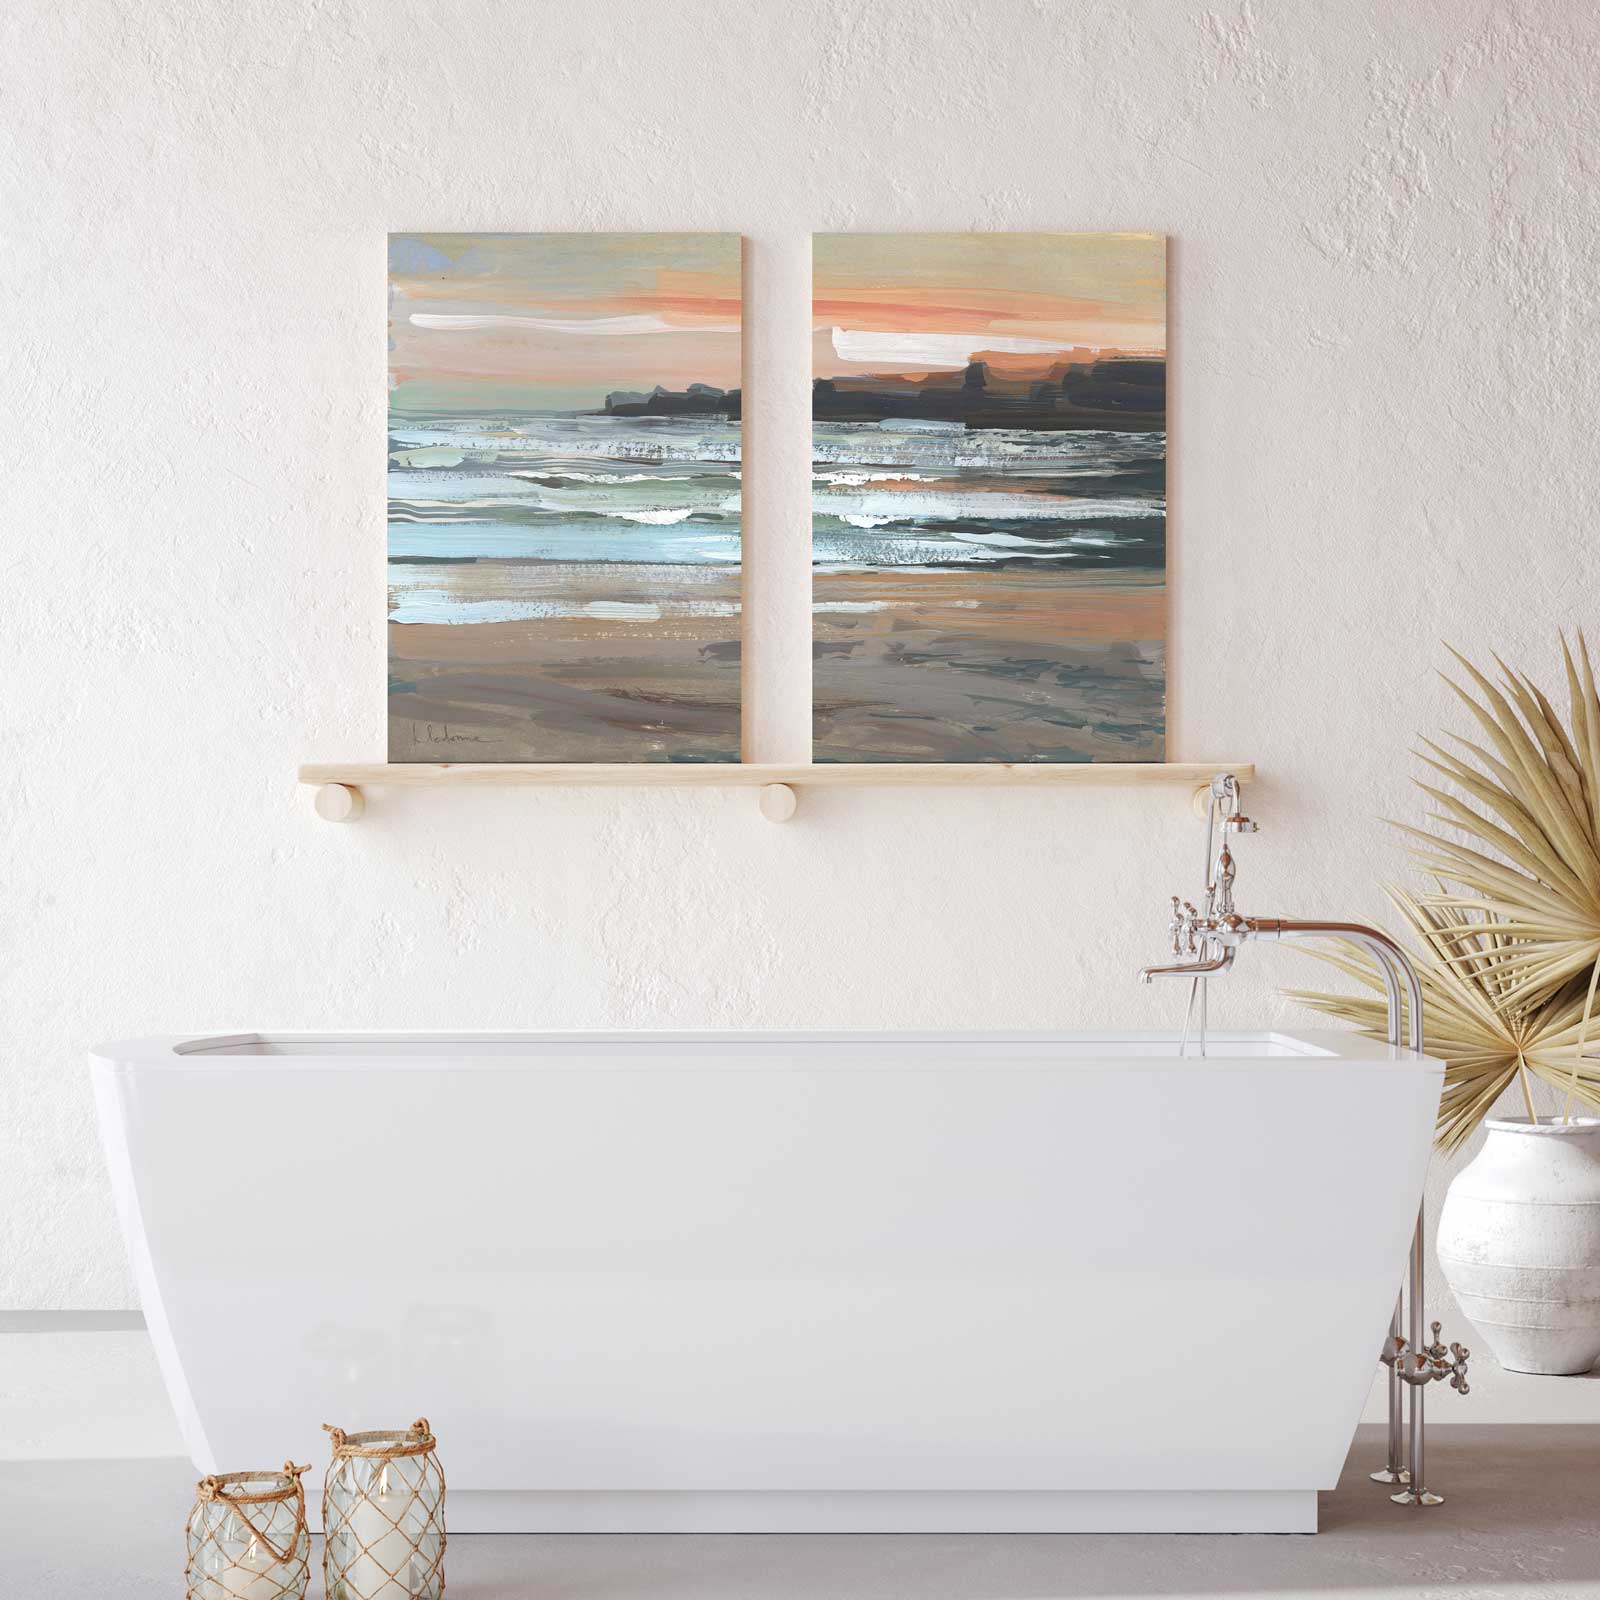 Otter Rock Sunset - Canvas Print by Khara Ledonne | Art Bloom Canvas Art